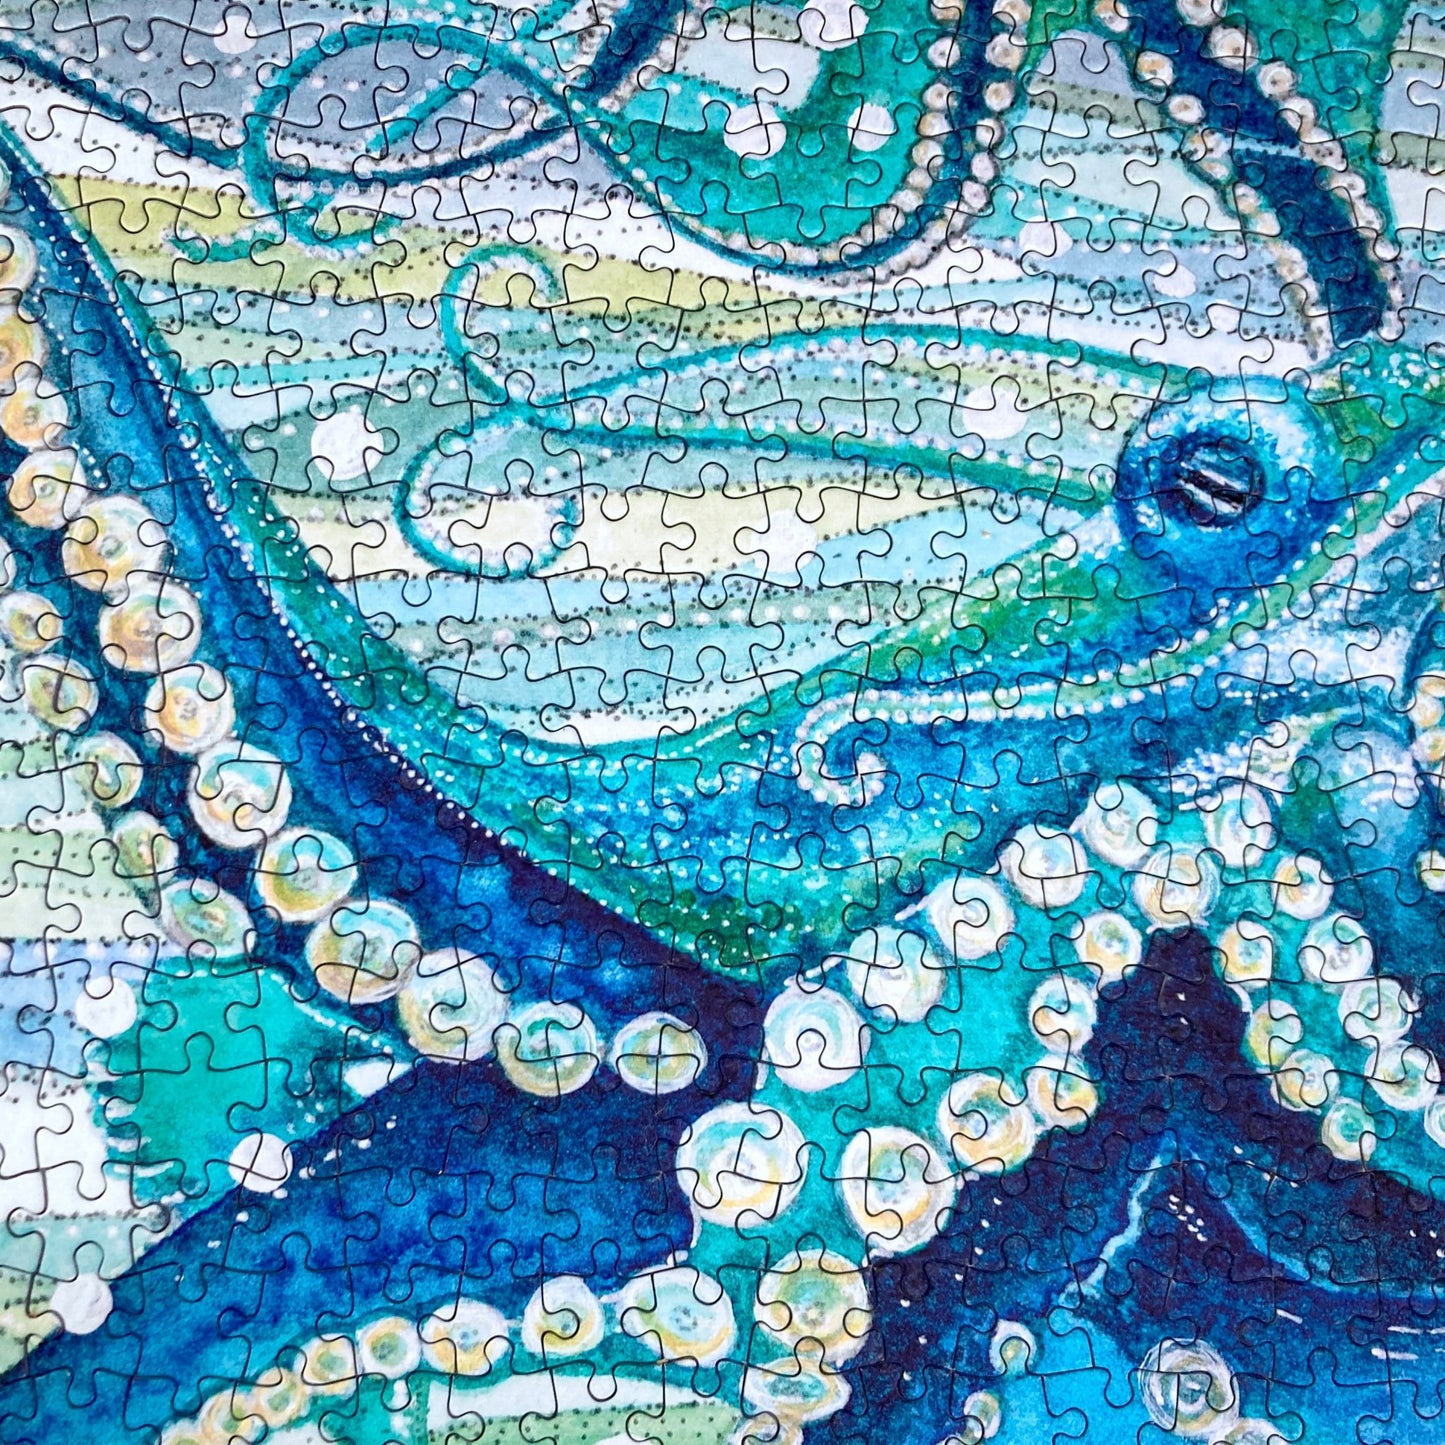 Octopus - Seaside Jigsaw Puzzle 1000 pieces - Silvery Seas - Coastal Art by Elizabeth Stocker - East Neuk Beach Crafts